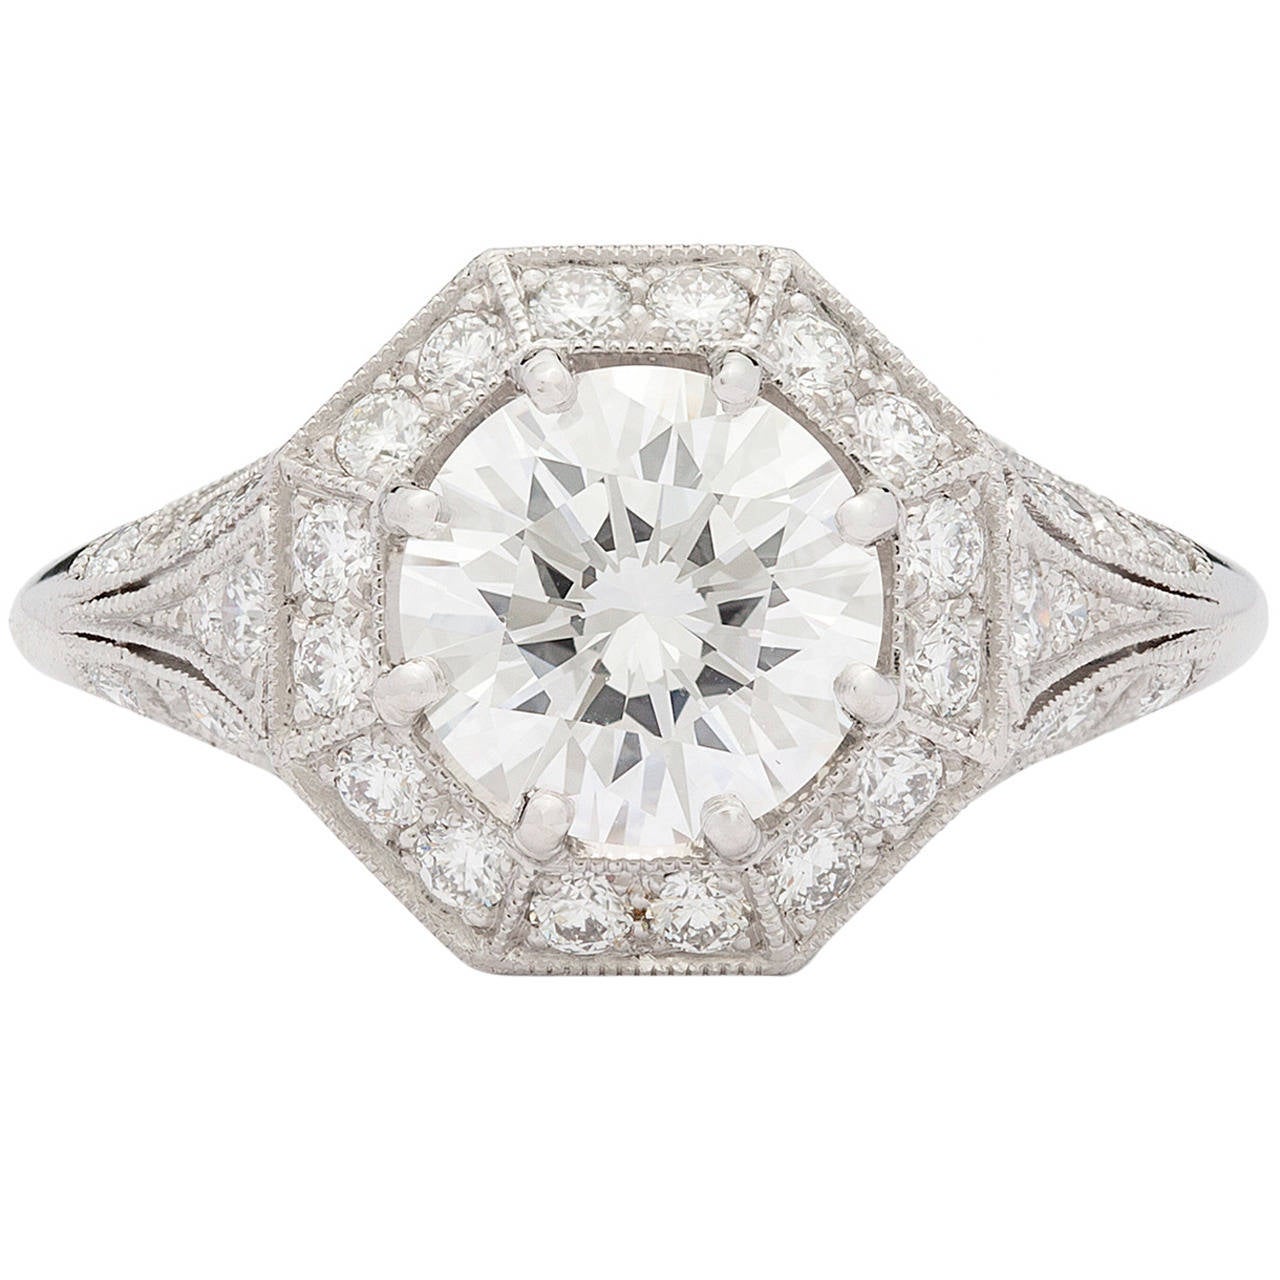 Colorless 1.69 Carat GIA Certified Diamond Platinum Ring